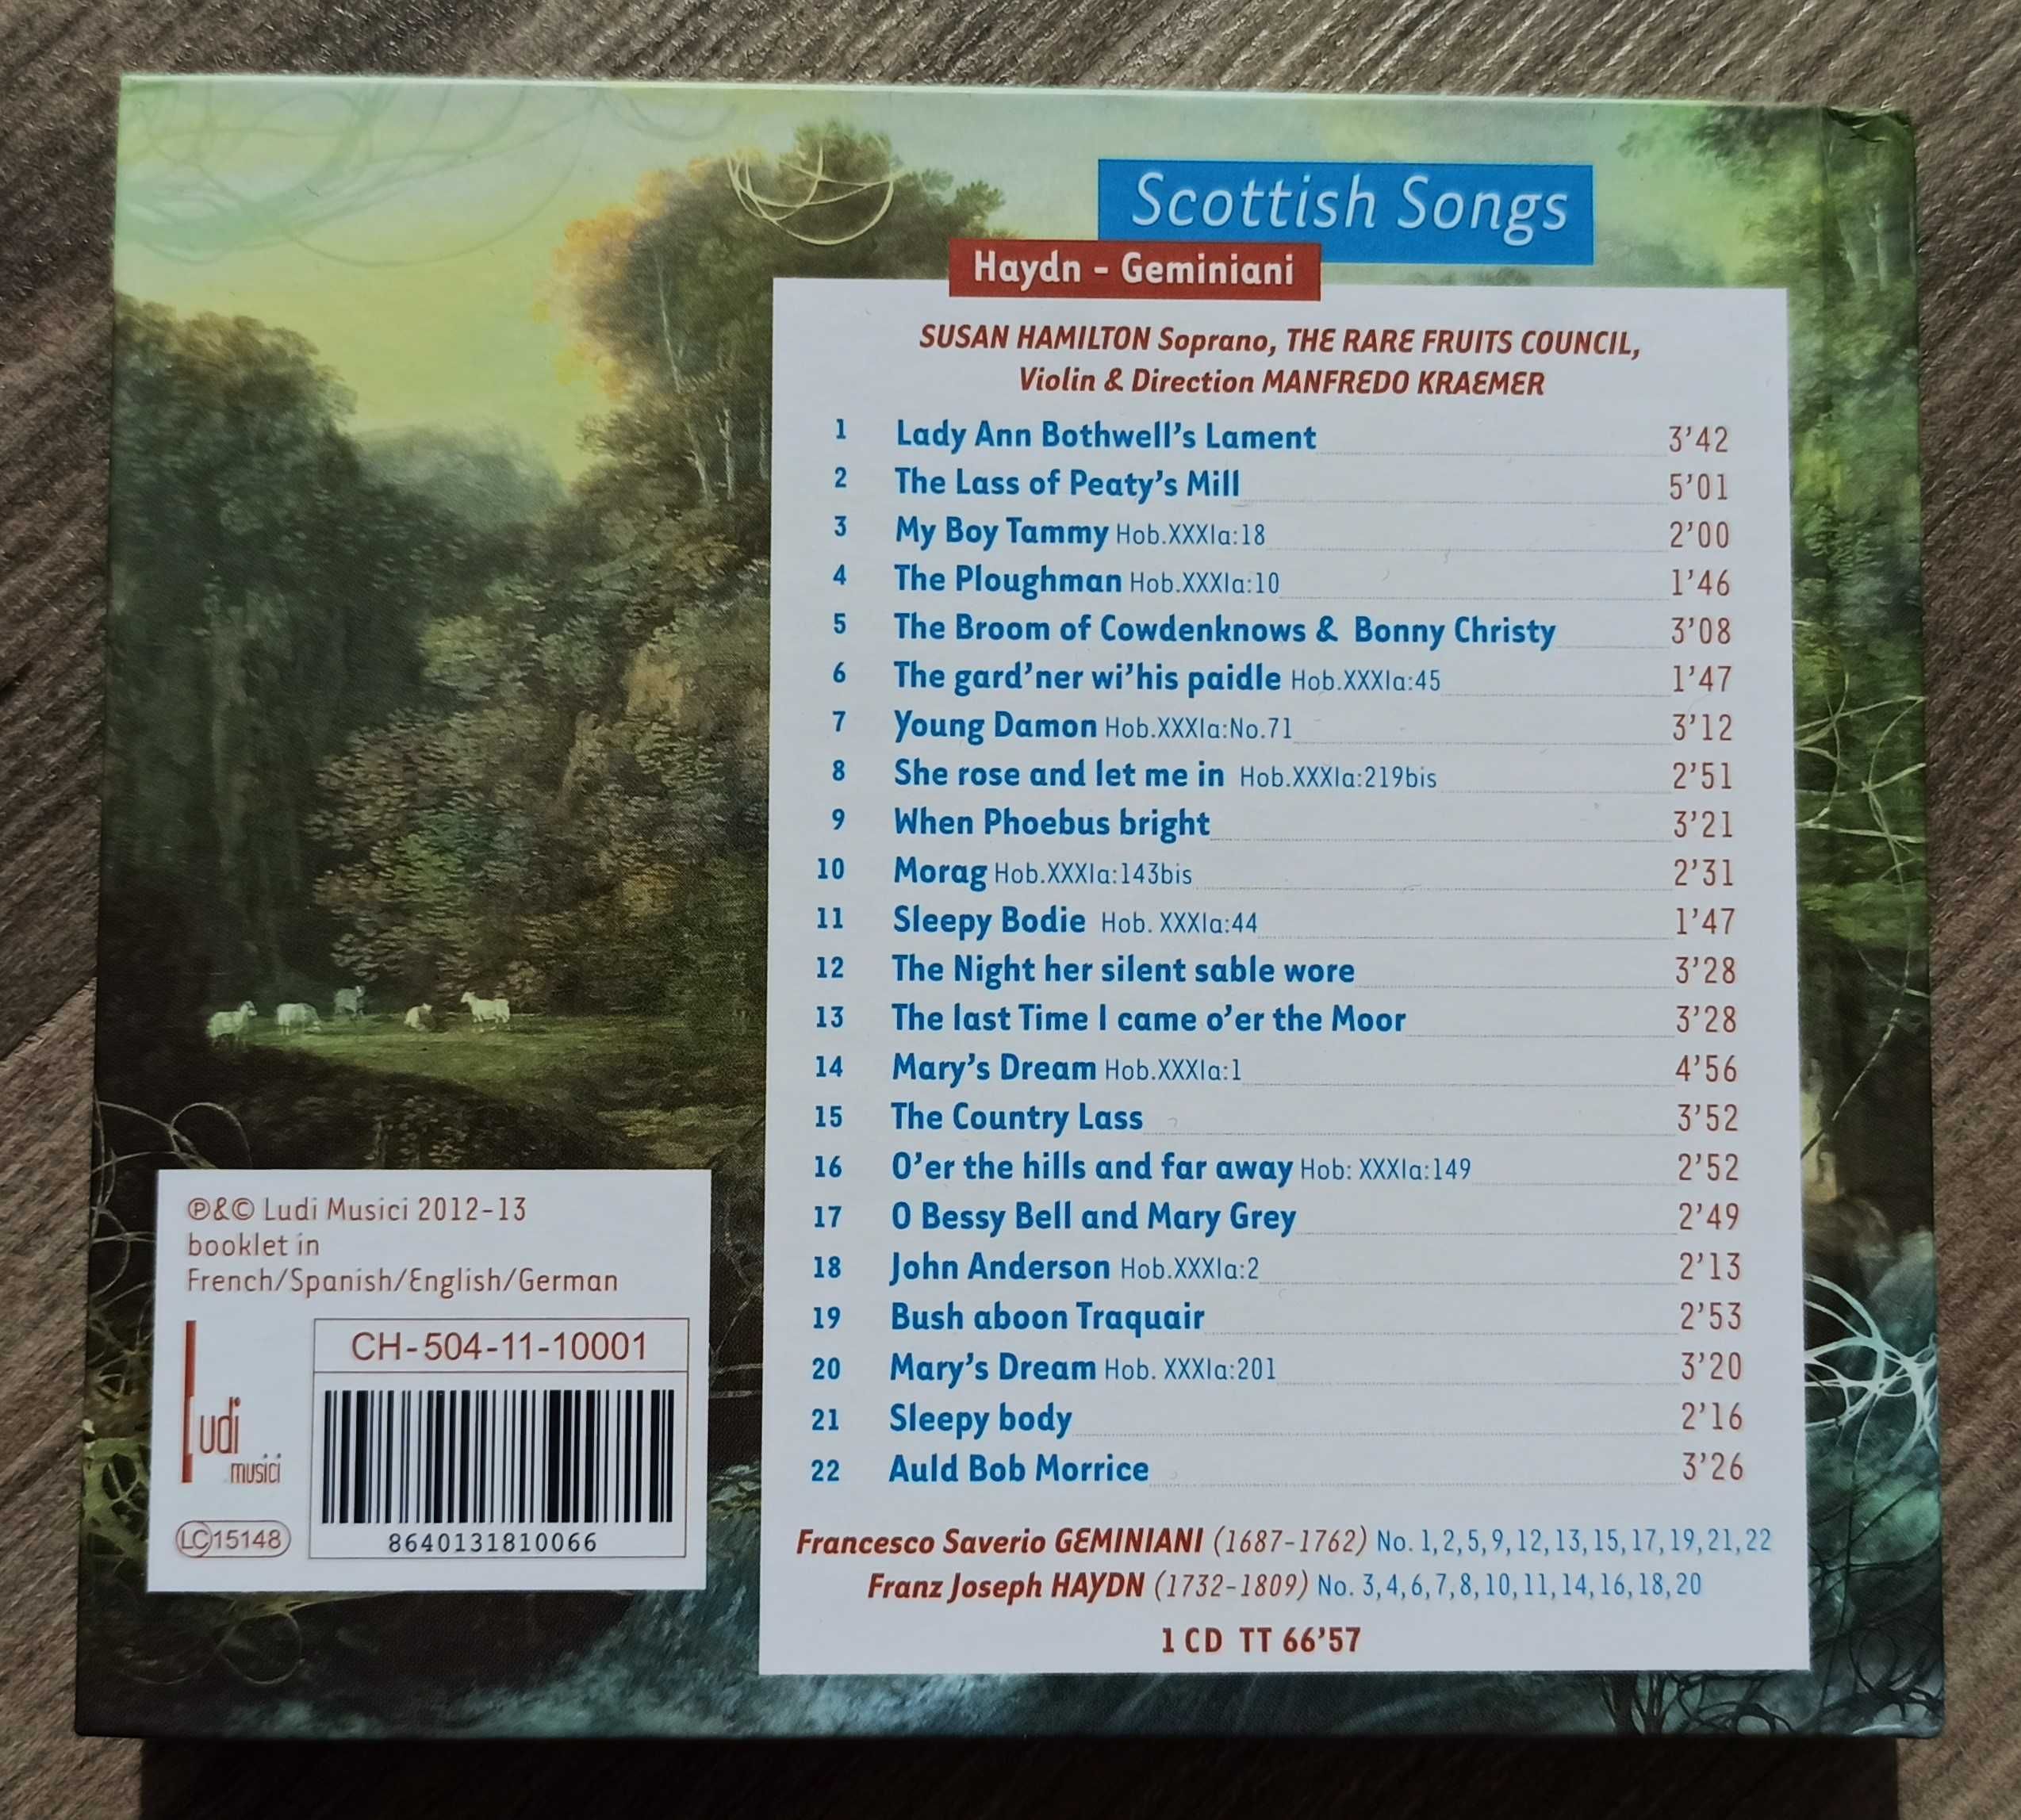 Haydn/Geminiani Scottish Songs Rare Fruits Council/M.Kraemer CD